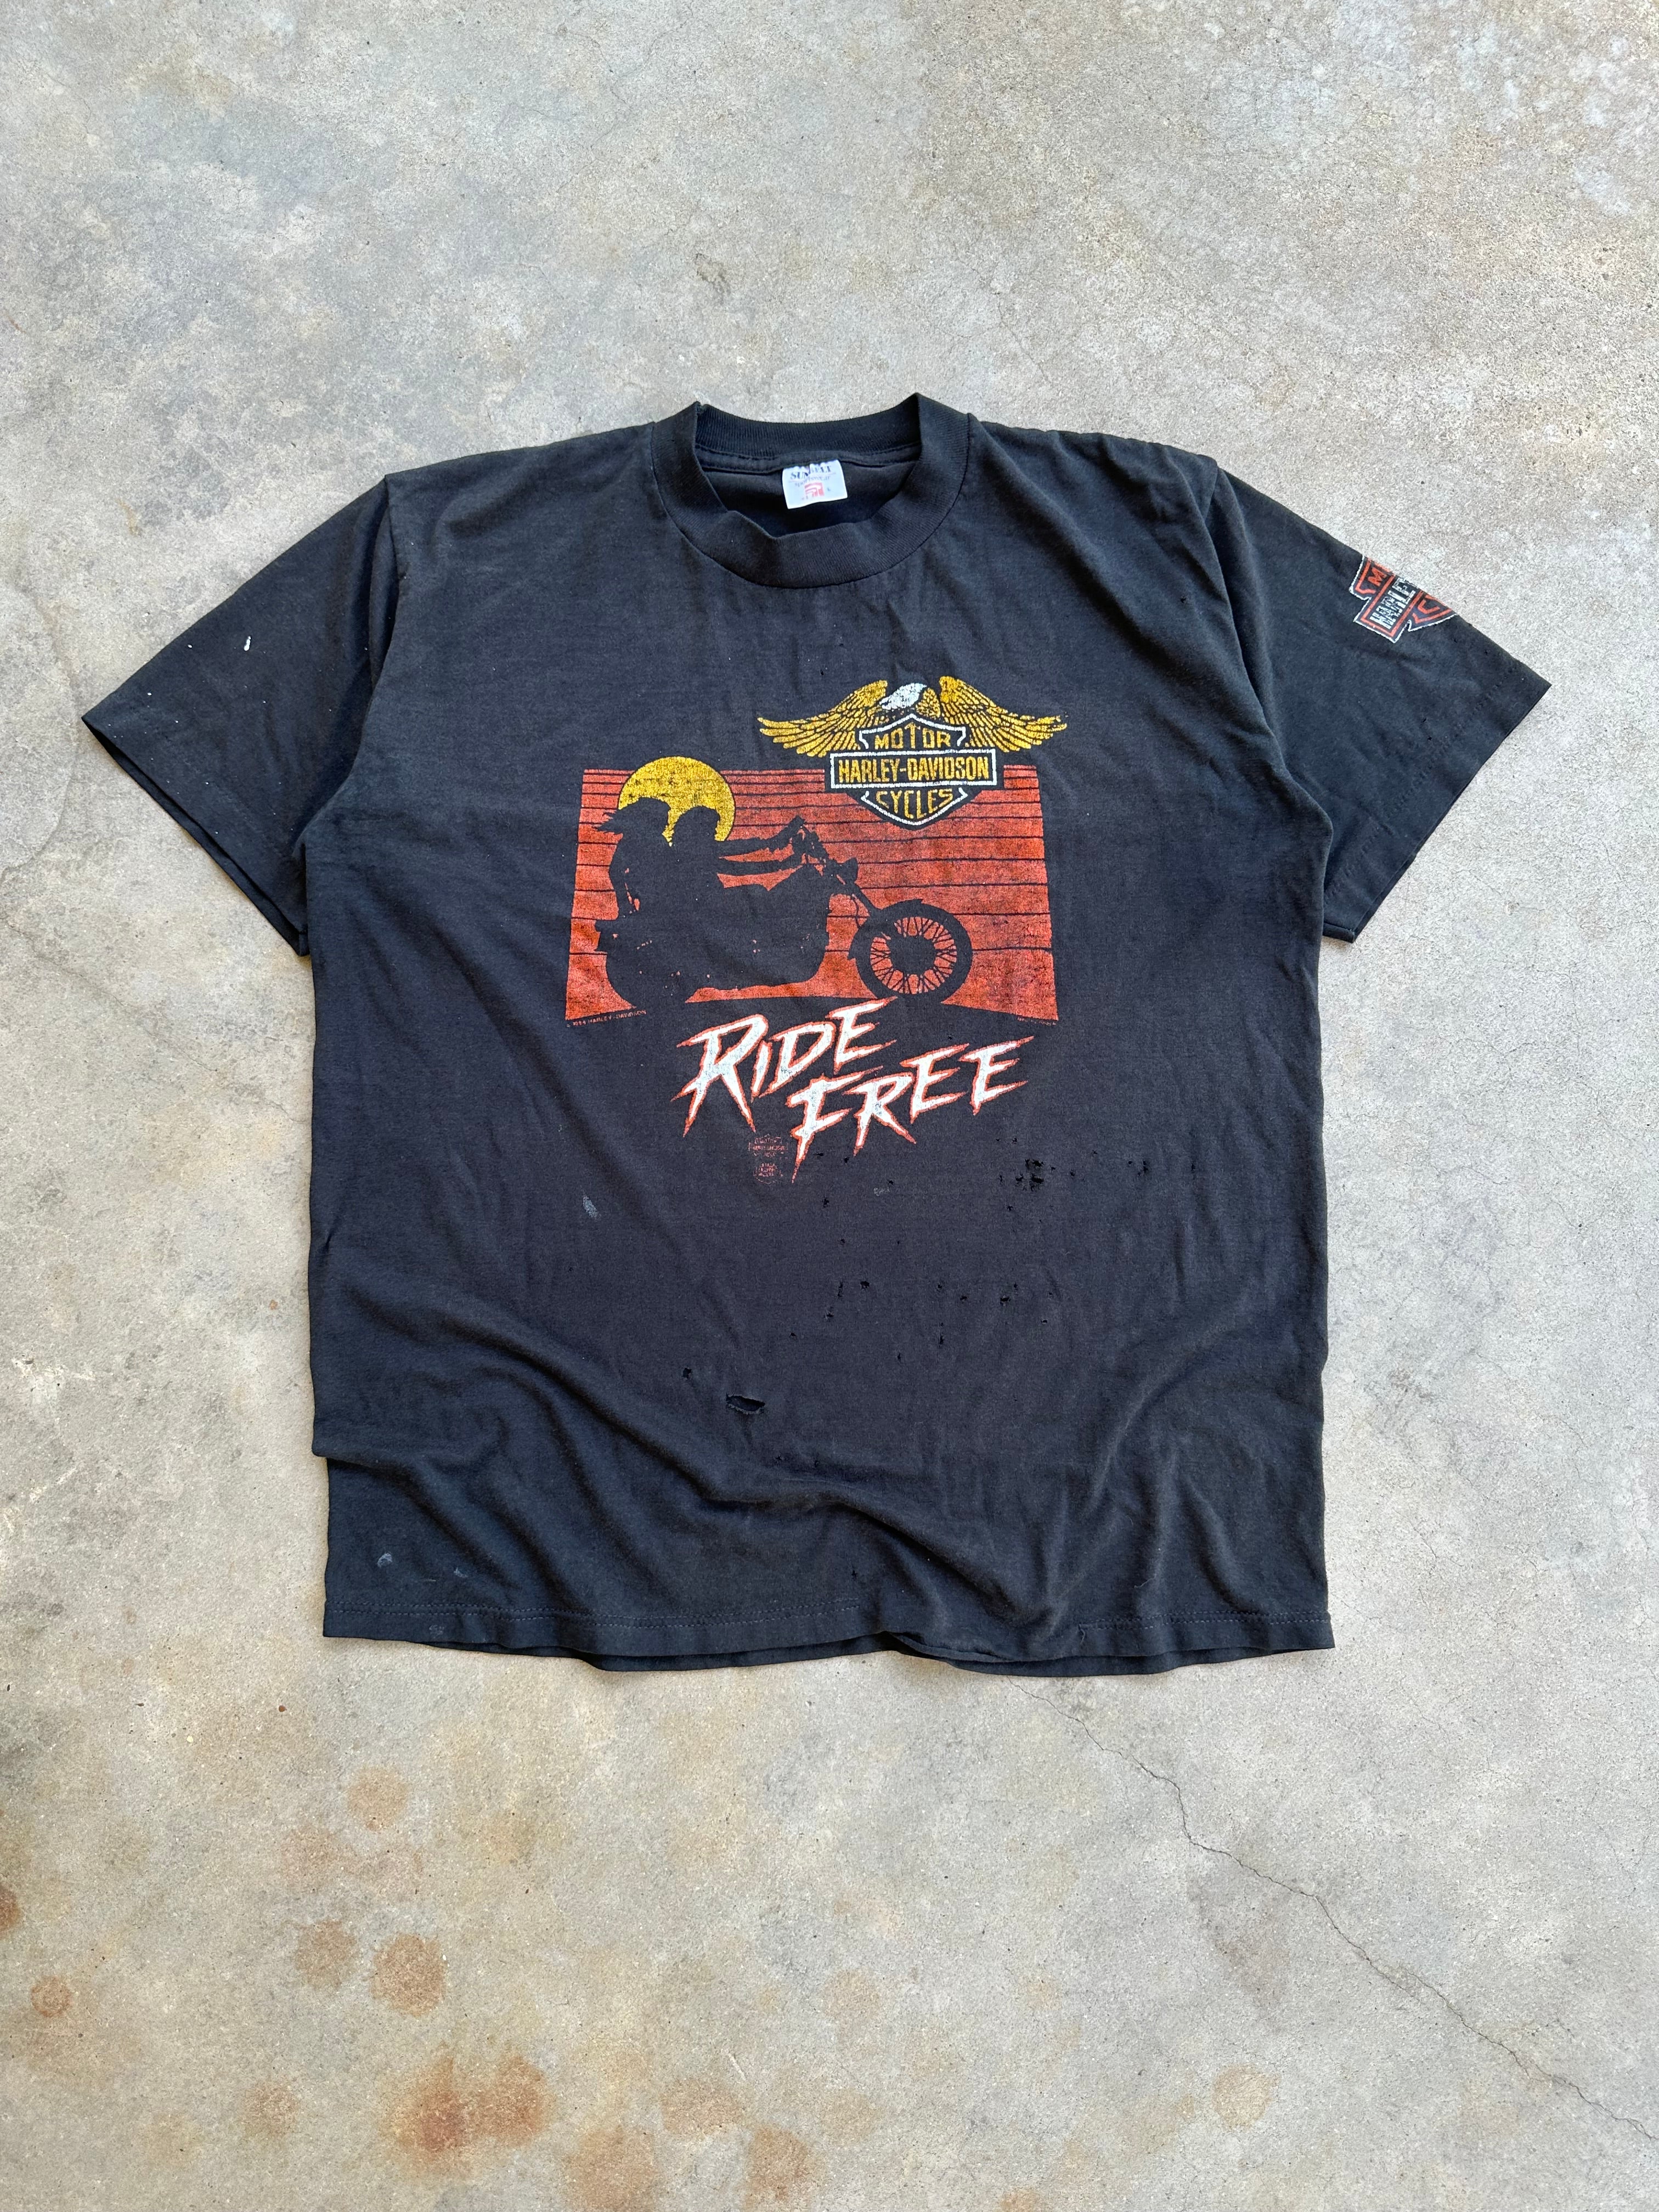 1980s Thrashed Harley Davidson Ride Free T-Shirt (M)